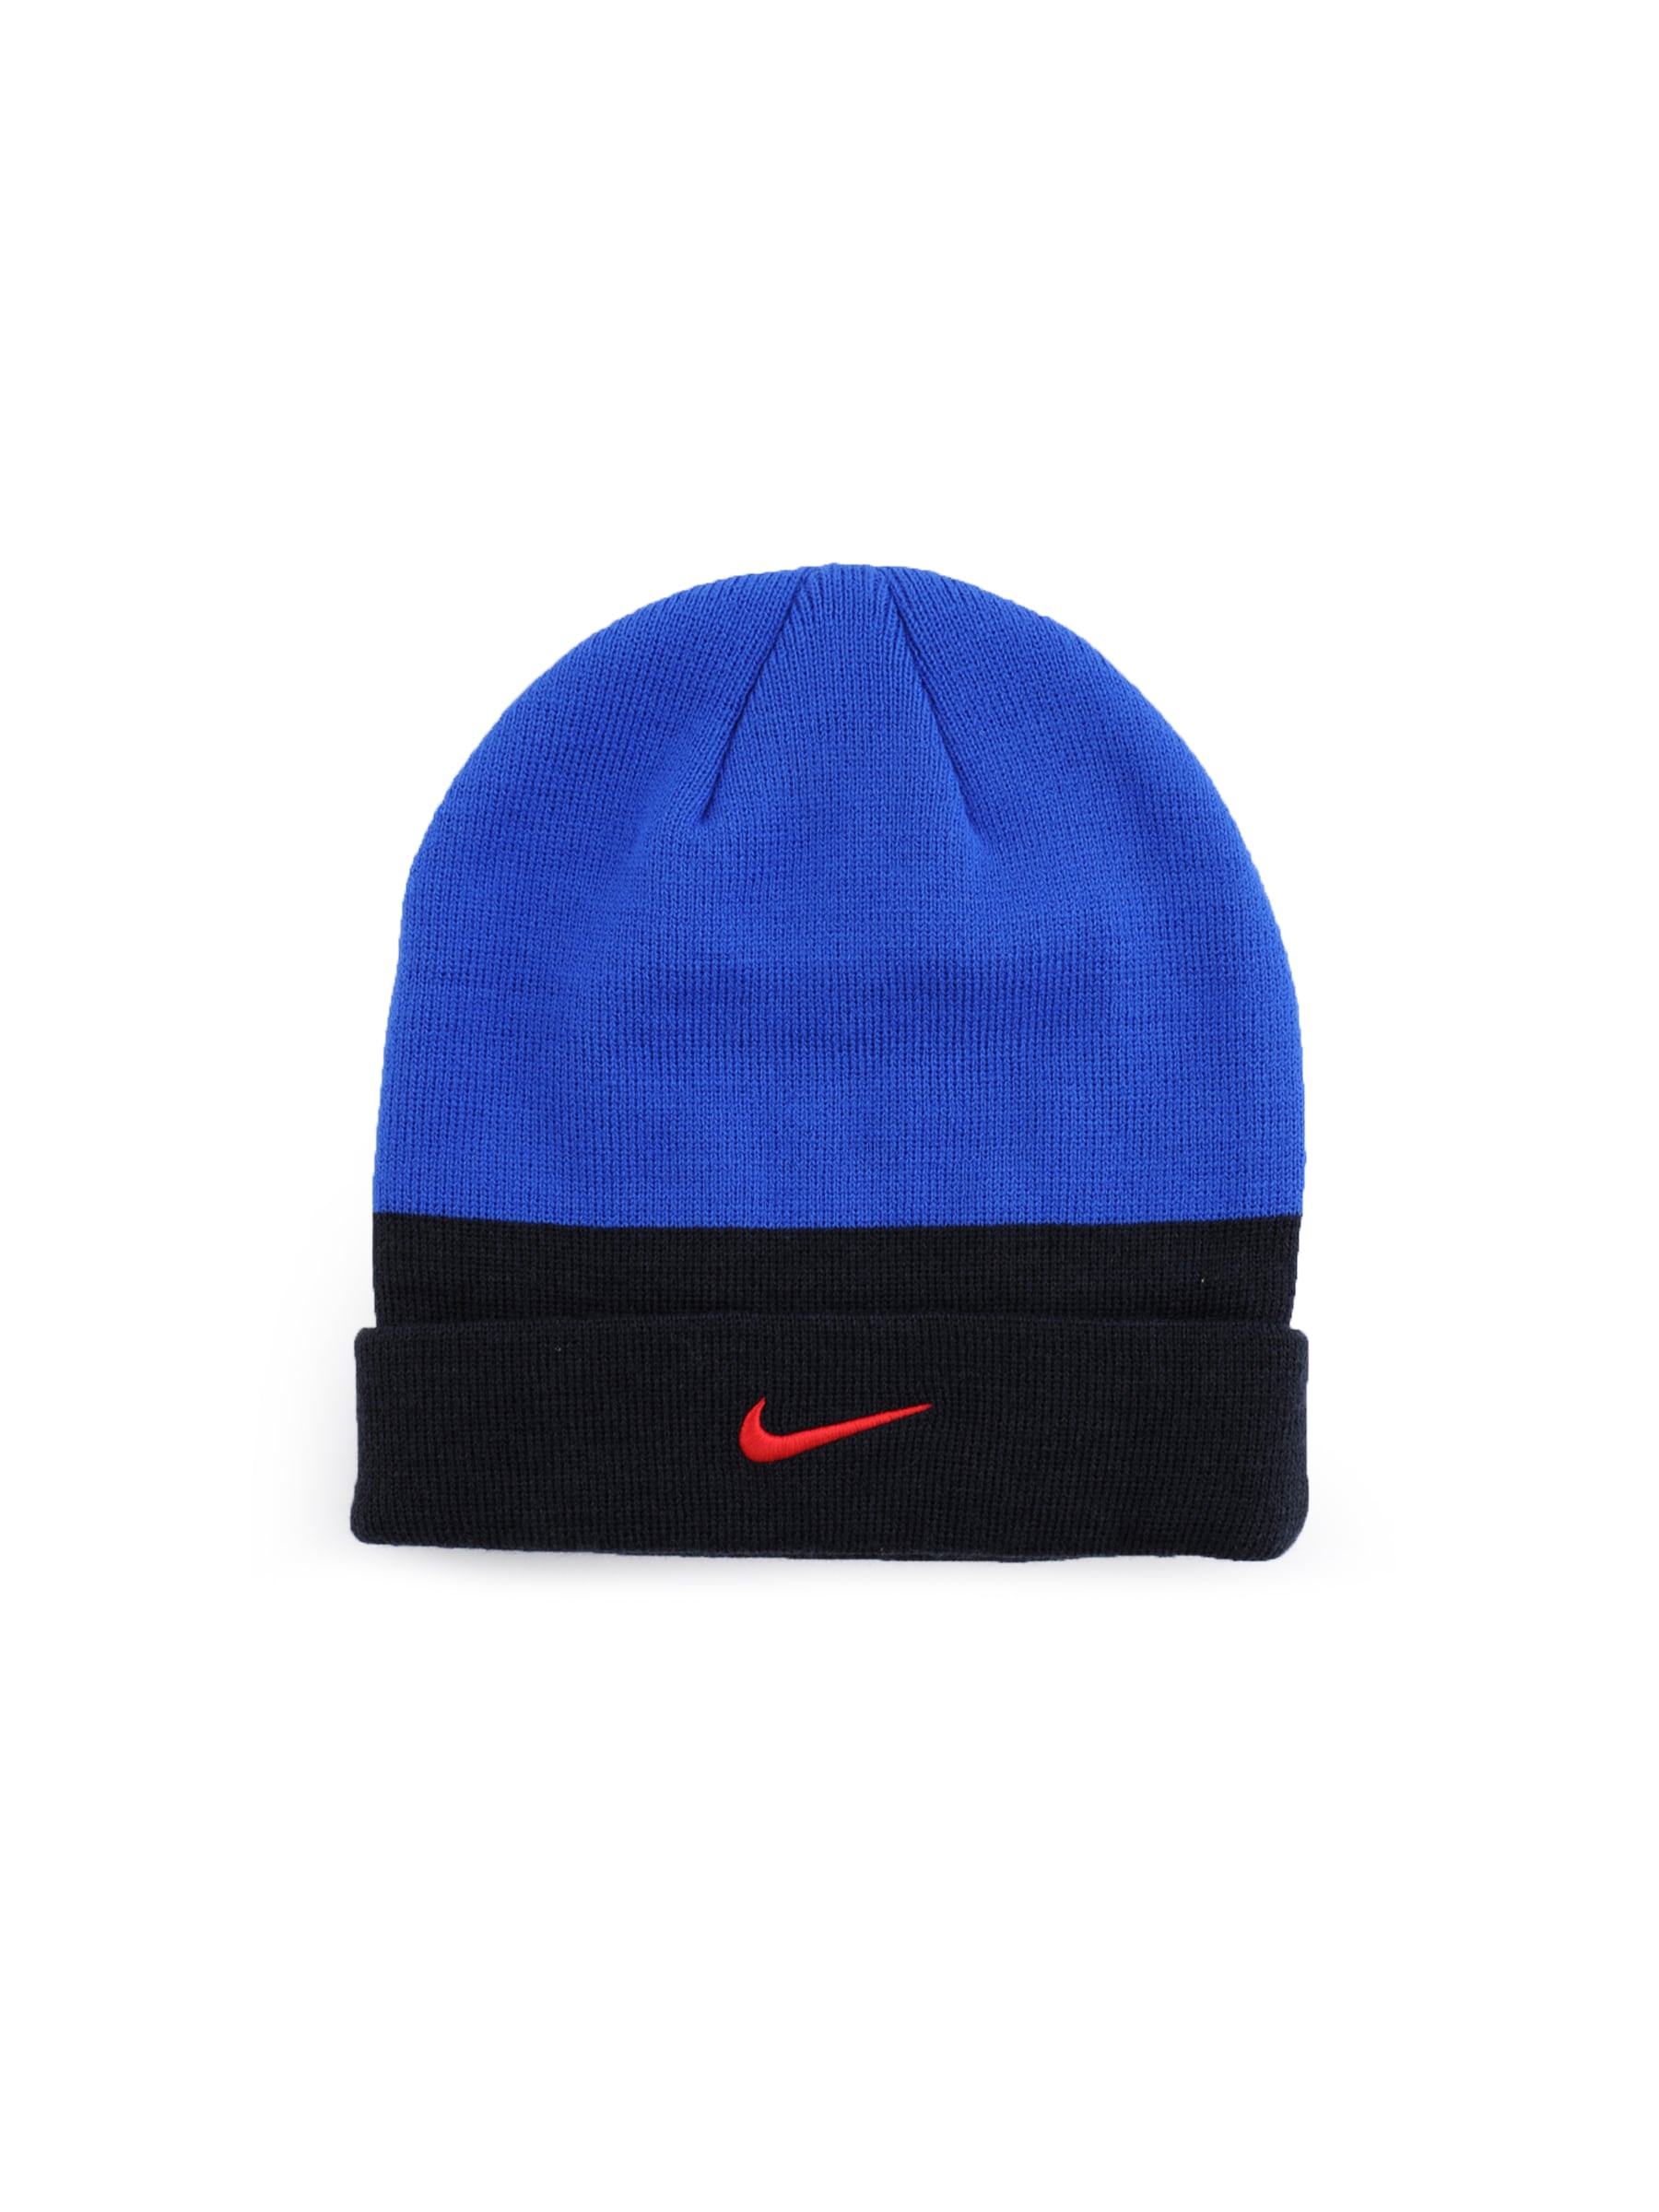 Nike Unisex Cuffed Beanie Blue Skull Cap